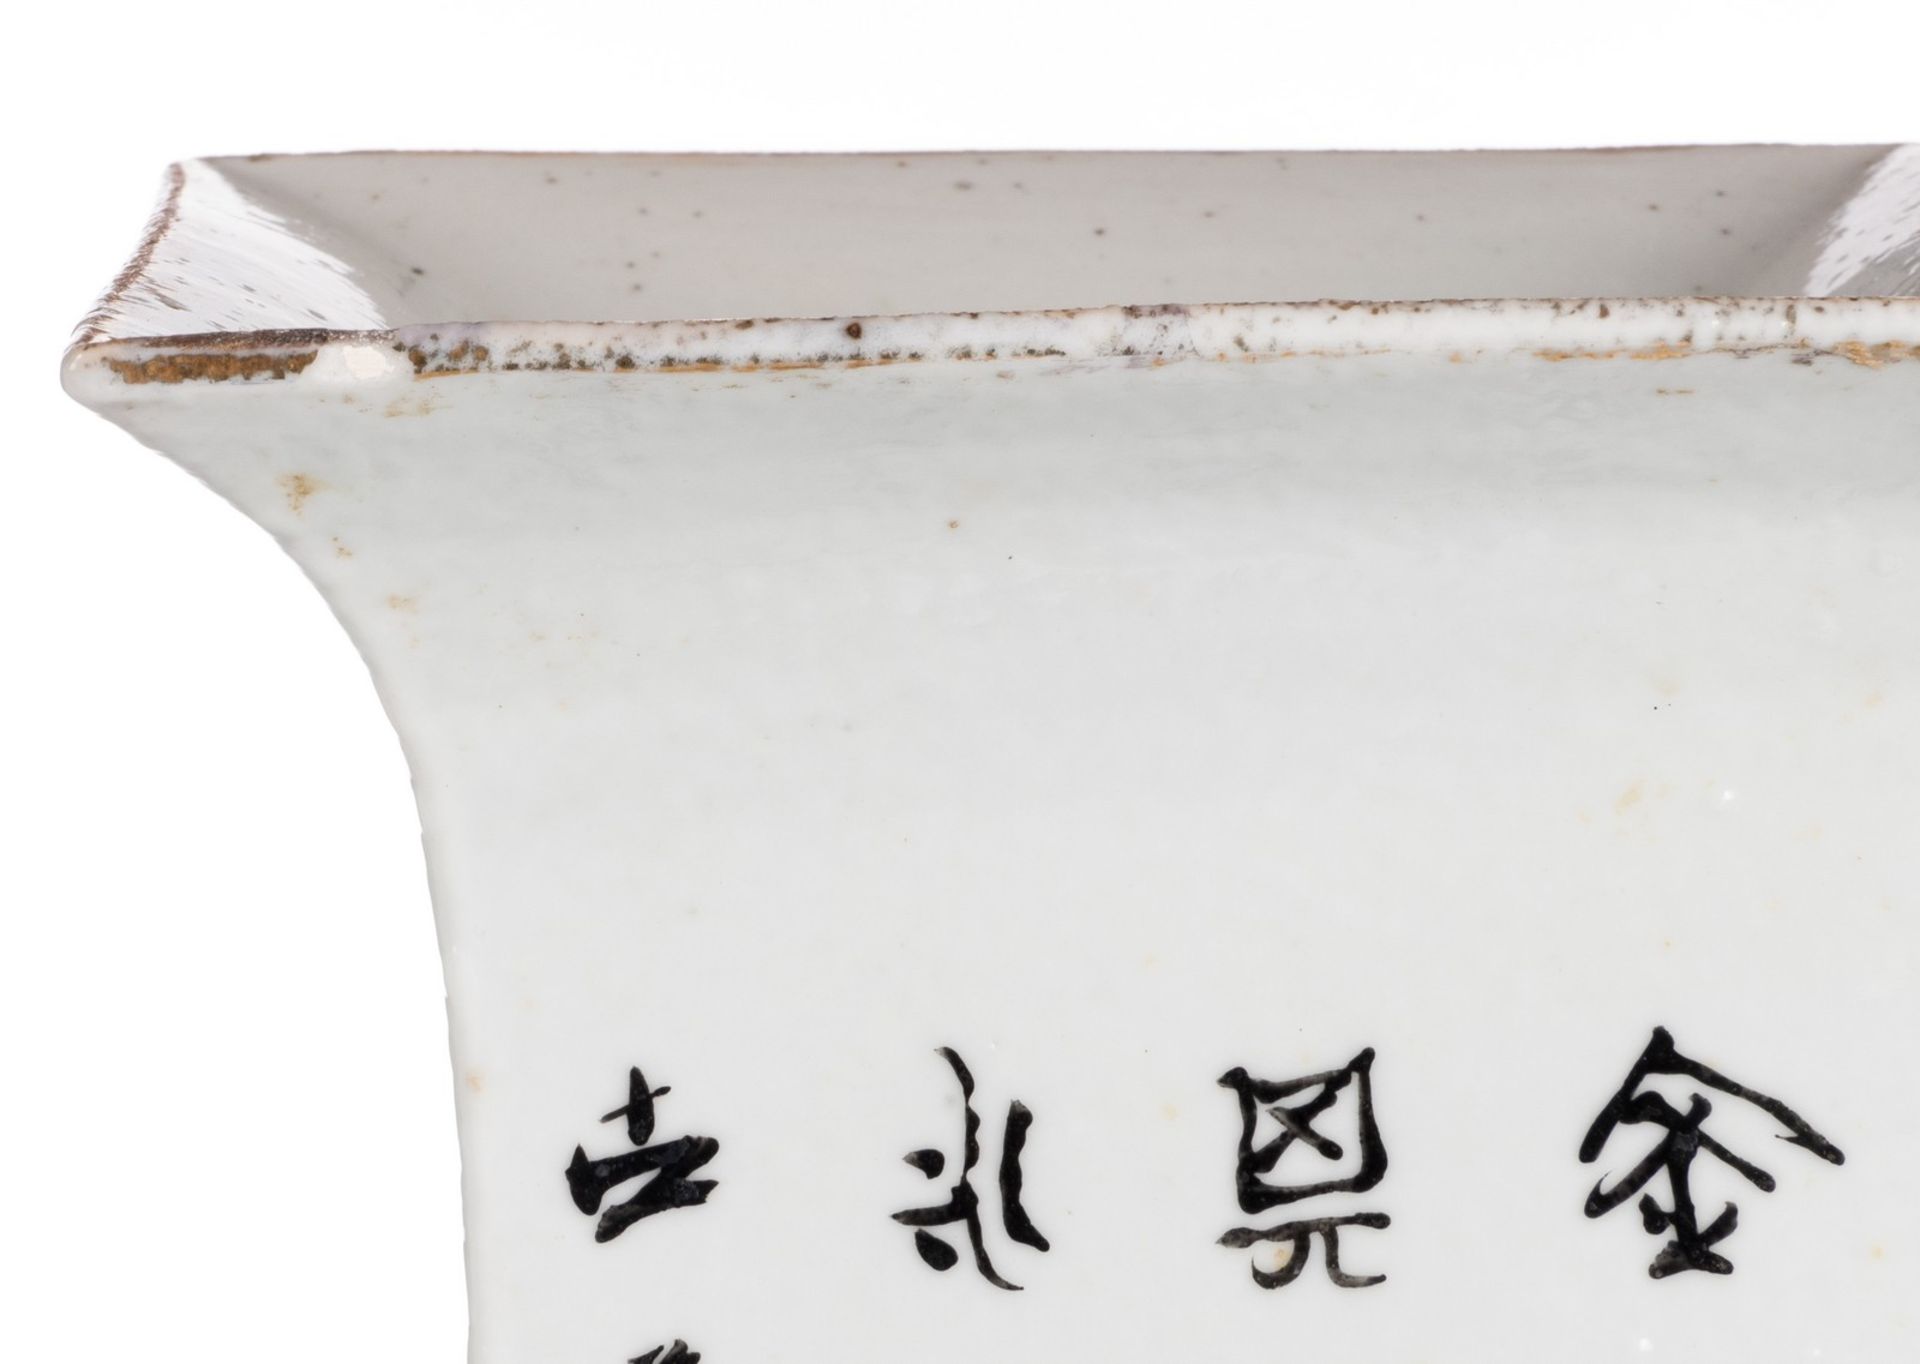 Two quadrangular vases, China, polychrome decorated with fishermen, literati and calligraphic texts, - Image 8 of 18